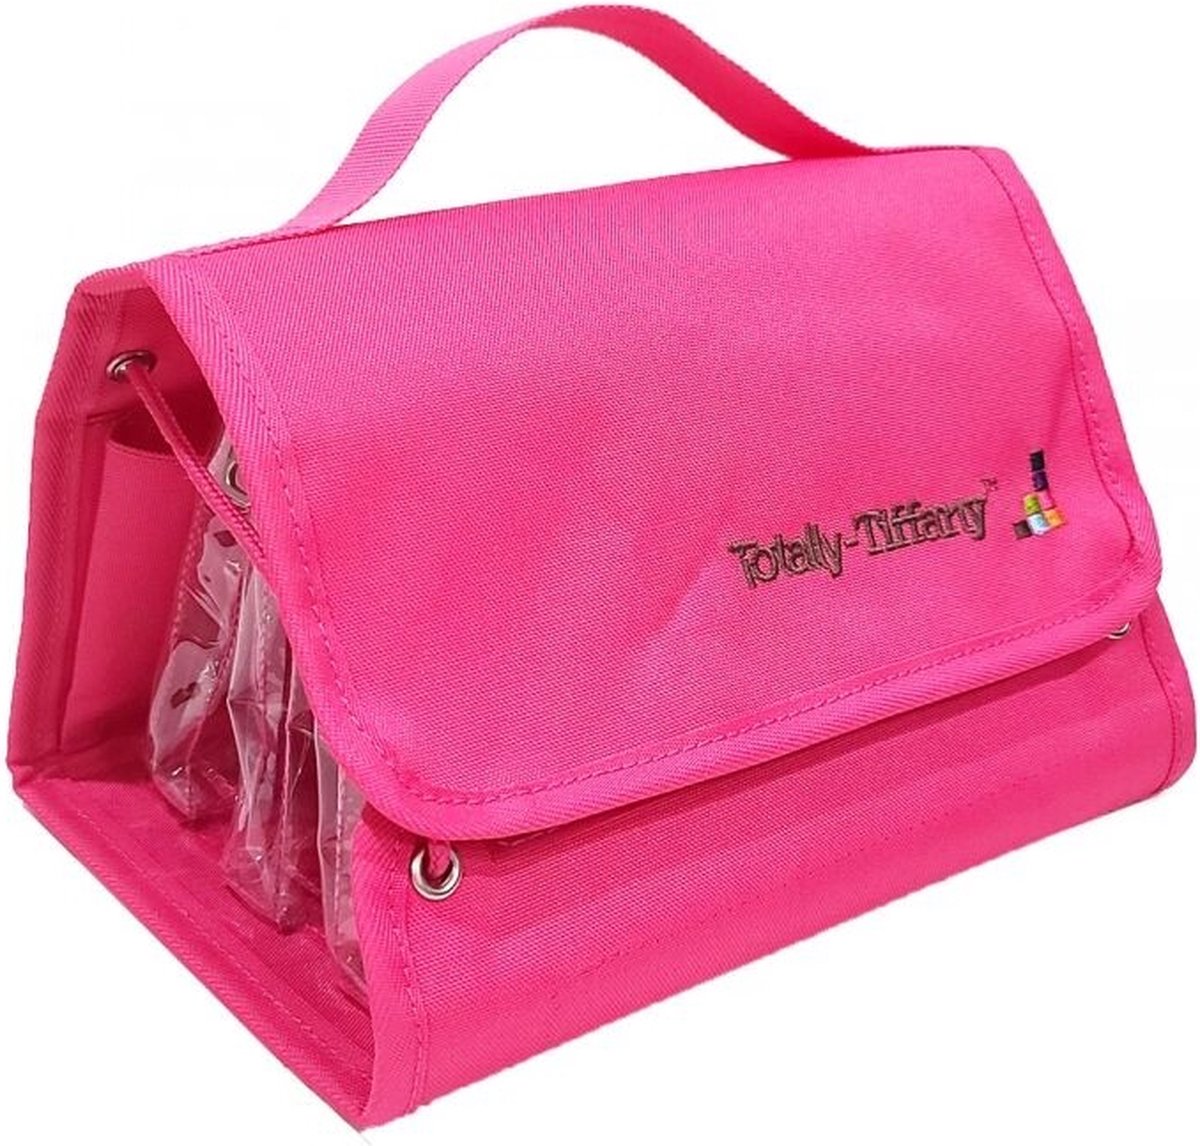 Totally Tiffany Triangle Traveler - Driehoekige reistas/hobbytas - Pink - Roze